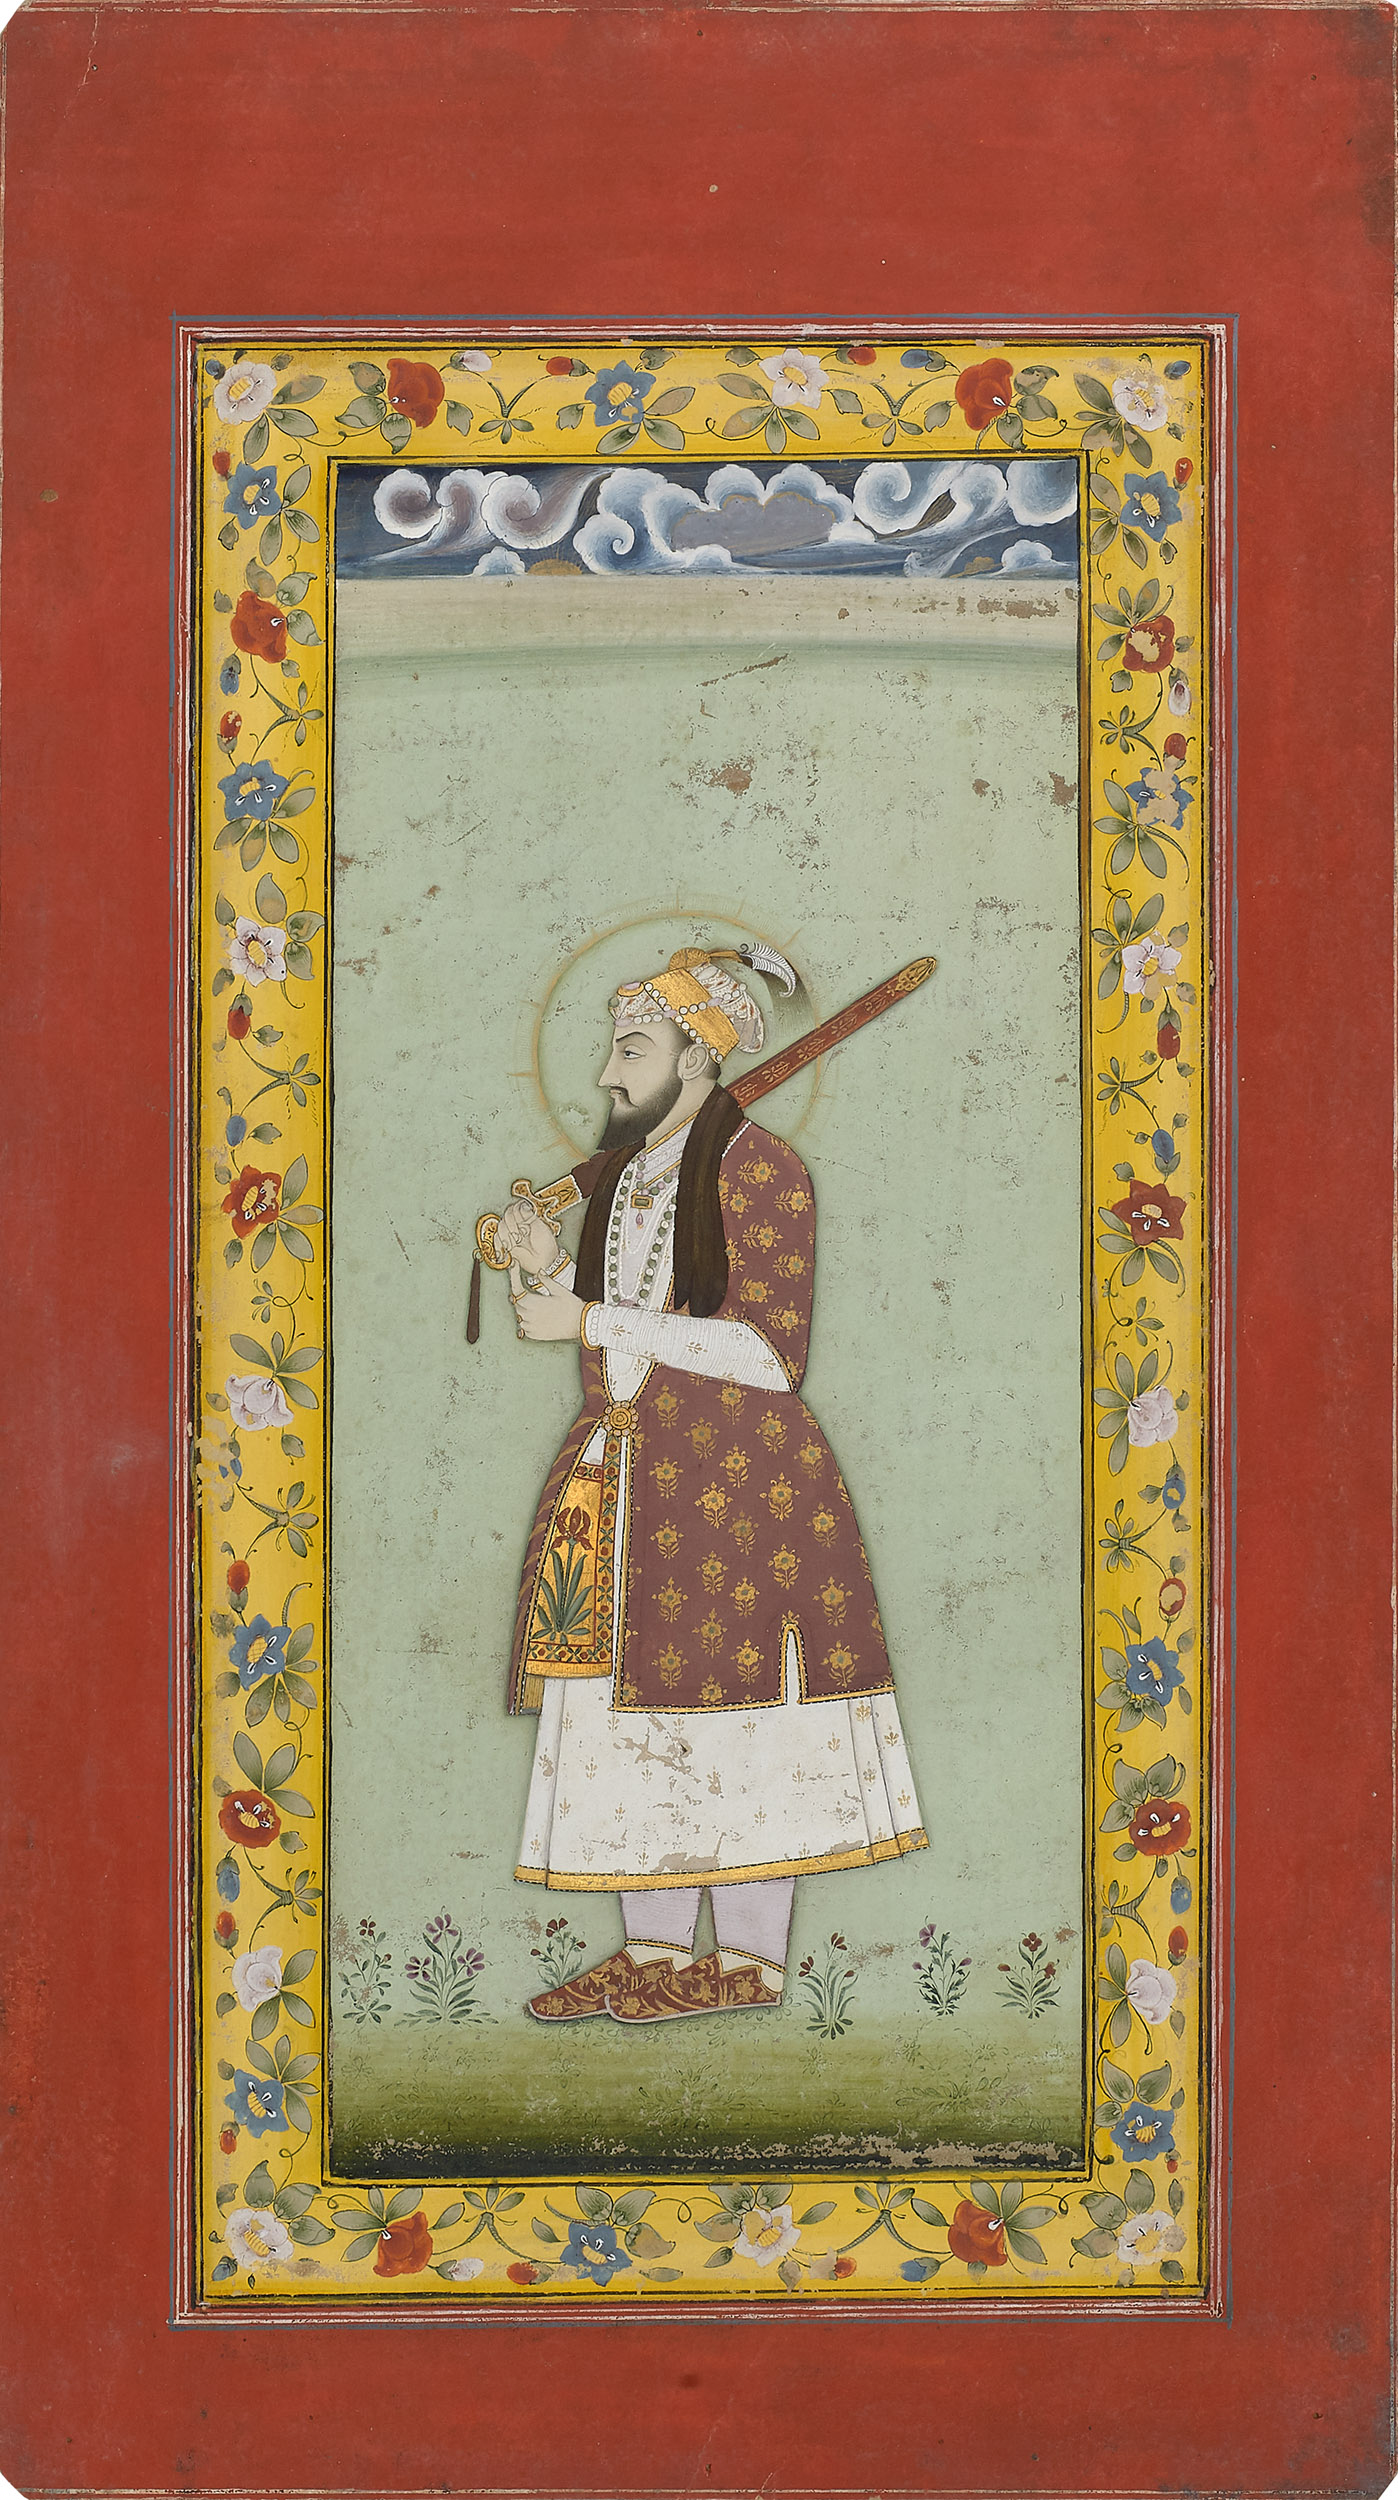 Shah Jahan Holding a Sword